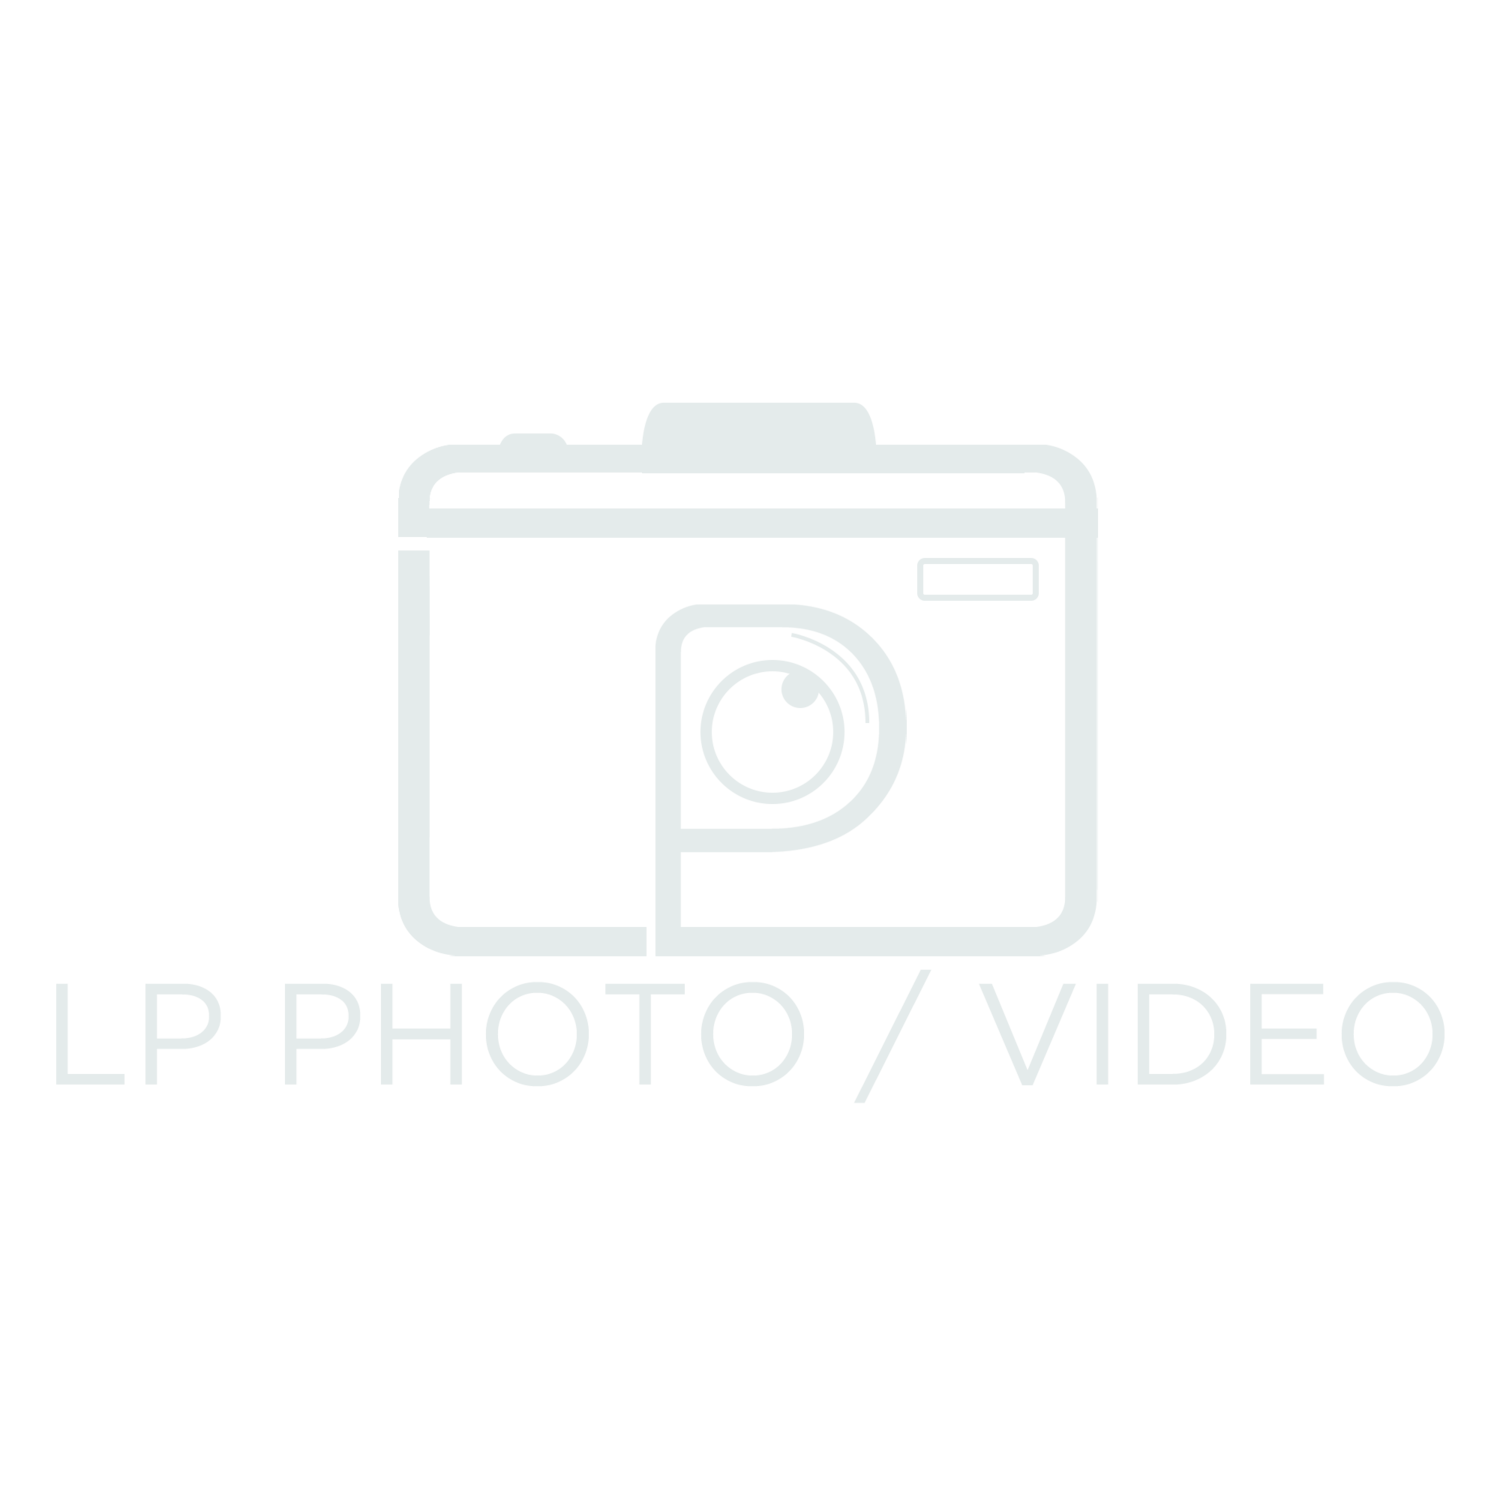 LP PHOTO / VIDEO